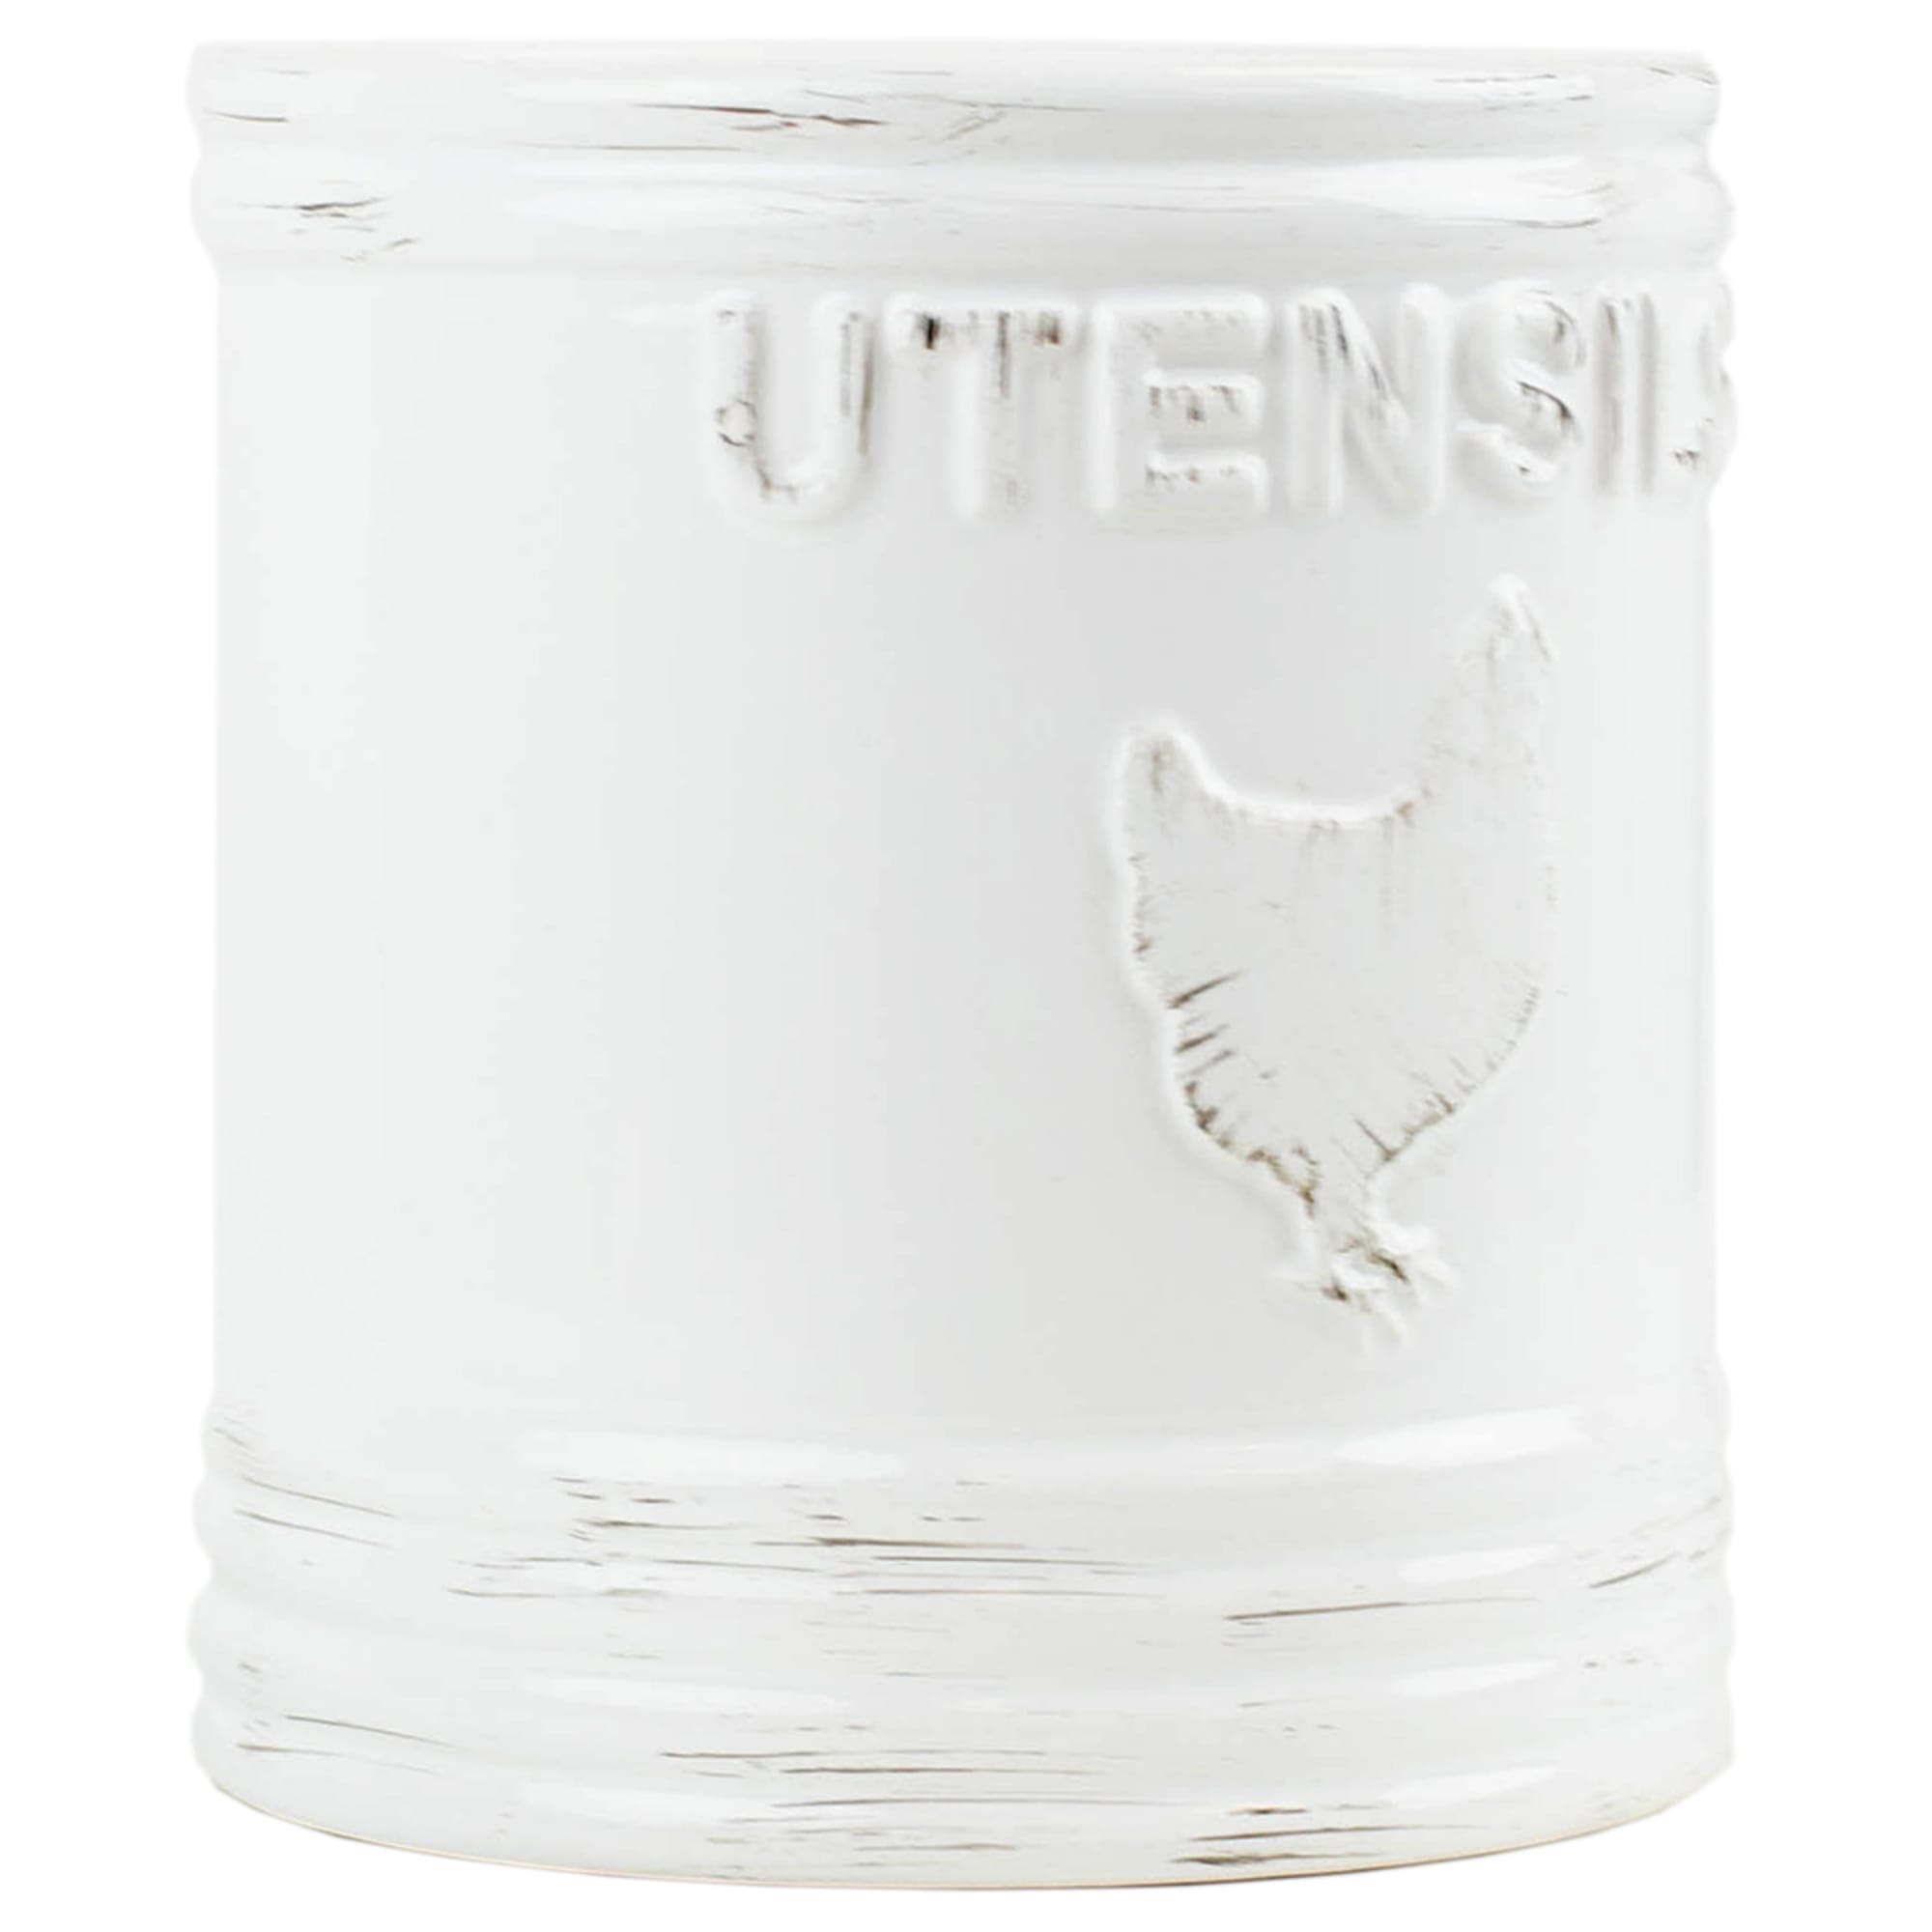 Home Basics Rustic Chic Rooster Ceramic Utensil Crock, White $10 EACH, CASE PACK OF 6